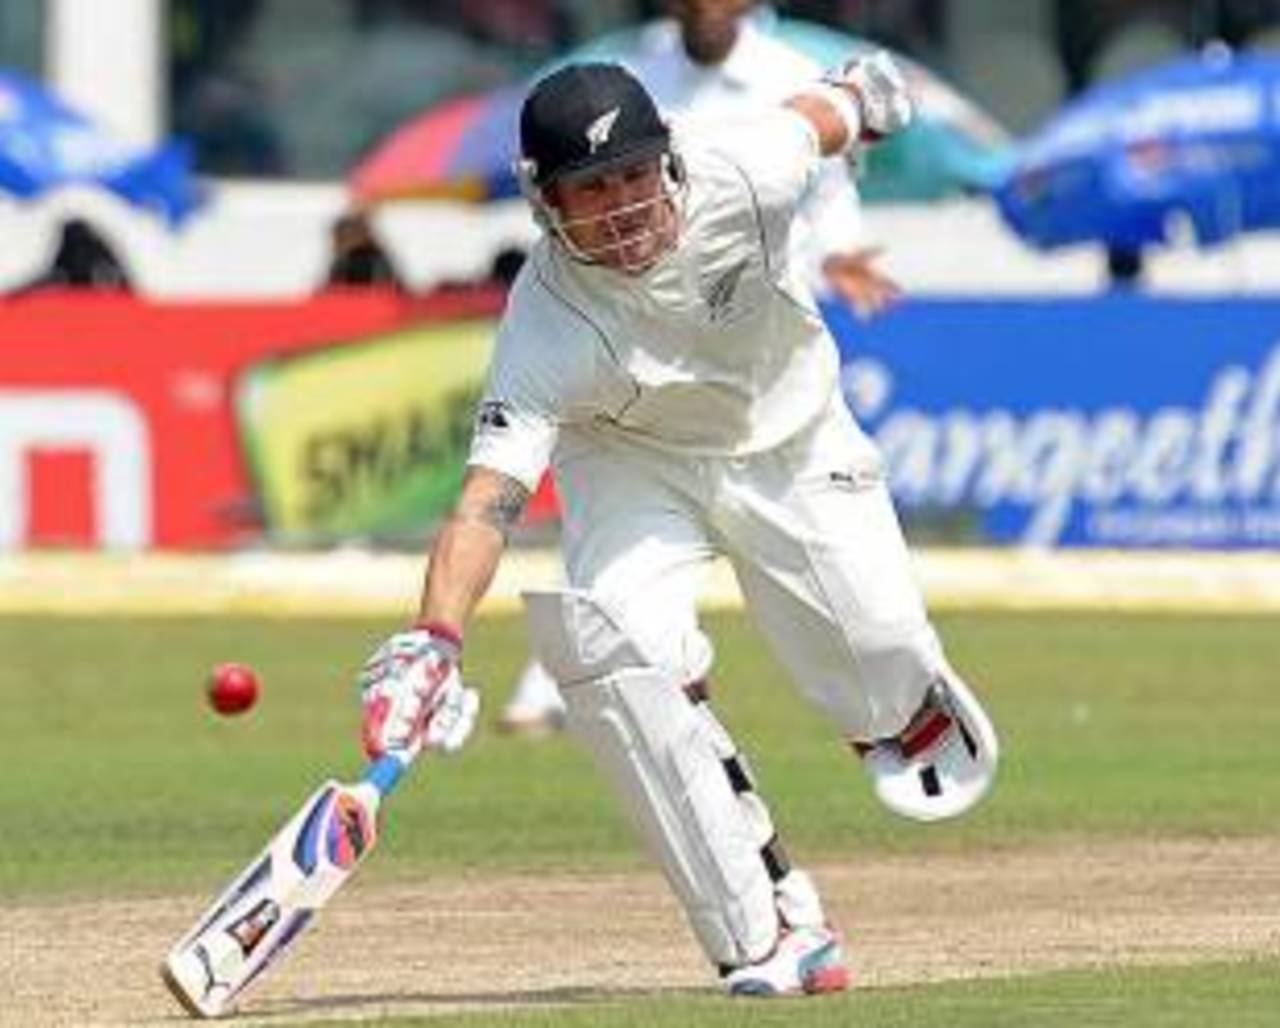 Brendon McCullum completes a run, Sri Lanka v New Zealand, 1st Test, Galle, 1st day, November 17, 2012